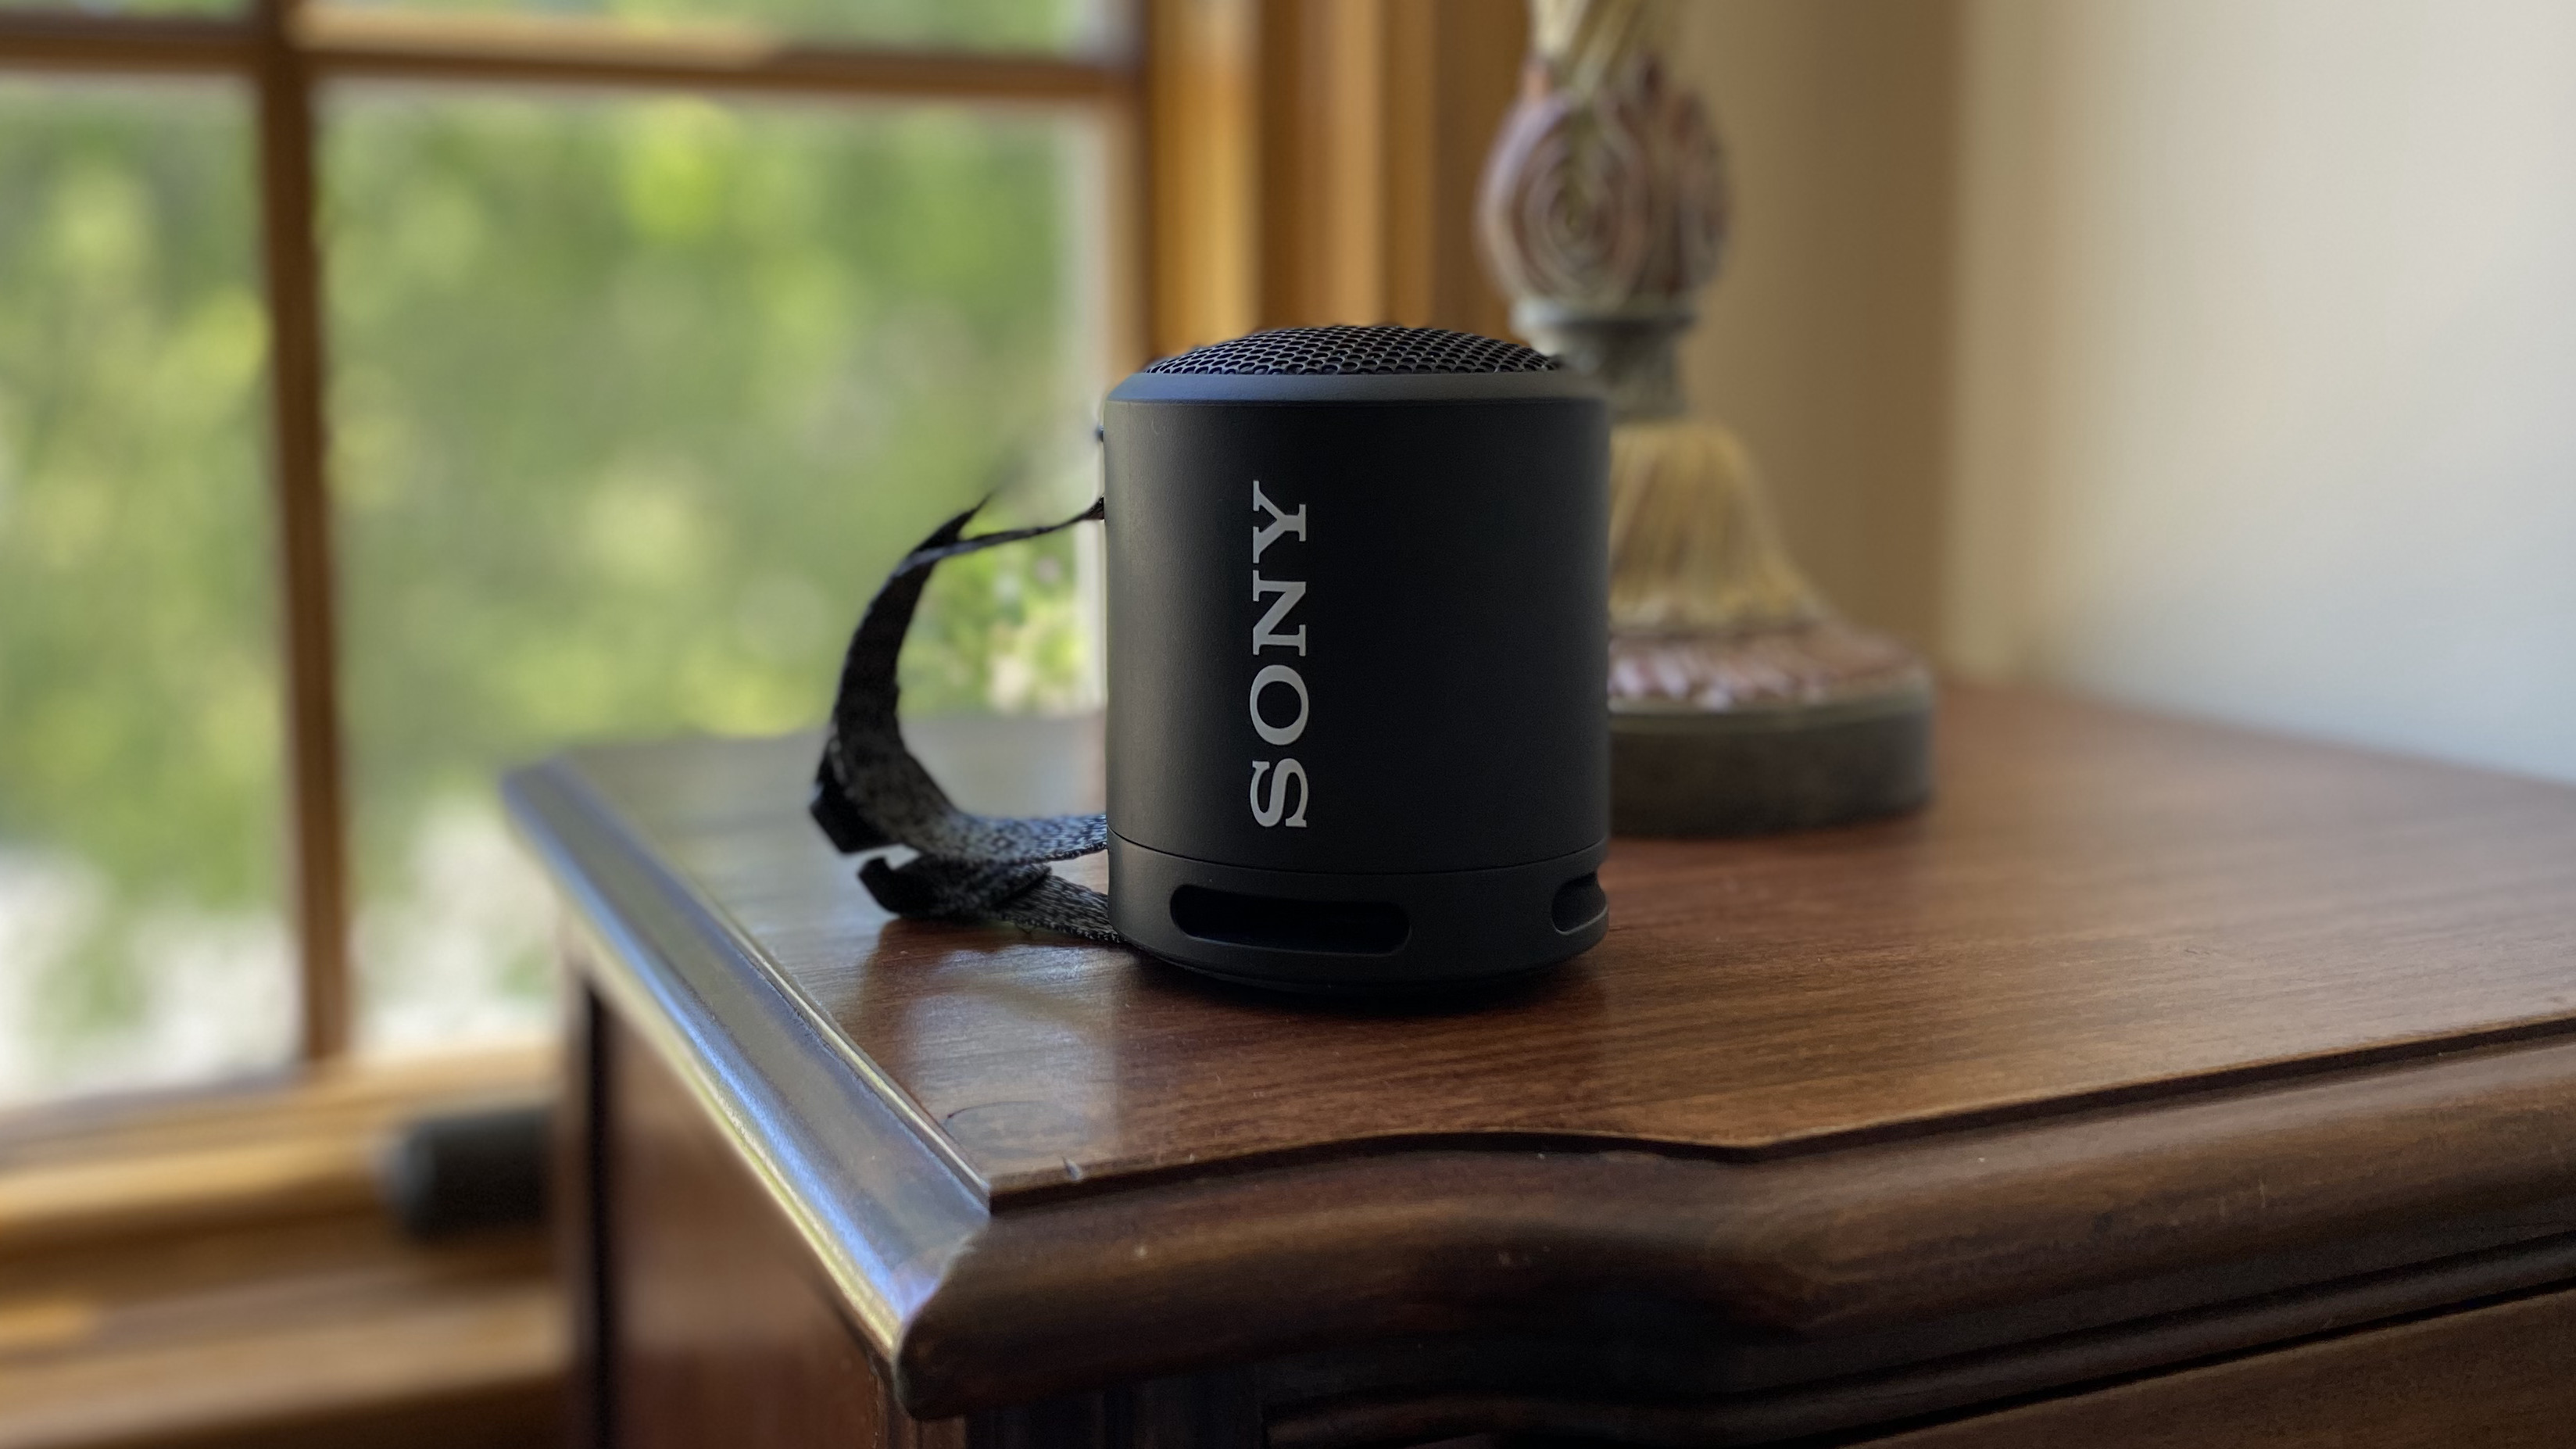 Buy Sony SRS-XB13 Compact Bluetooth Waterproof Speaker